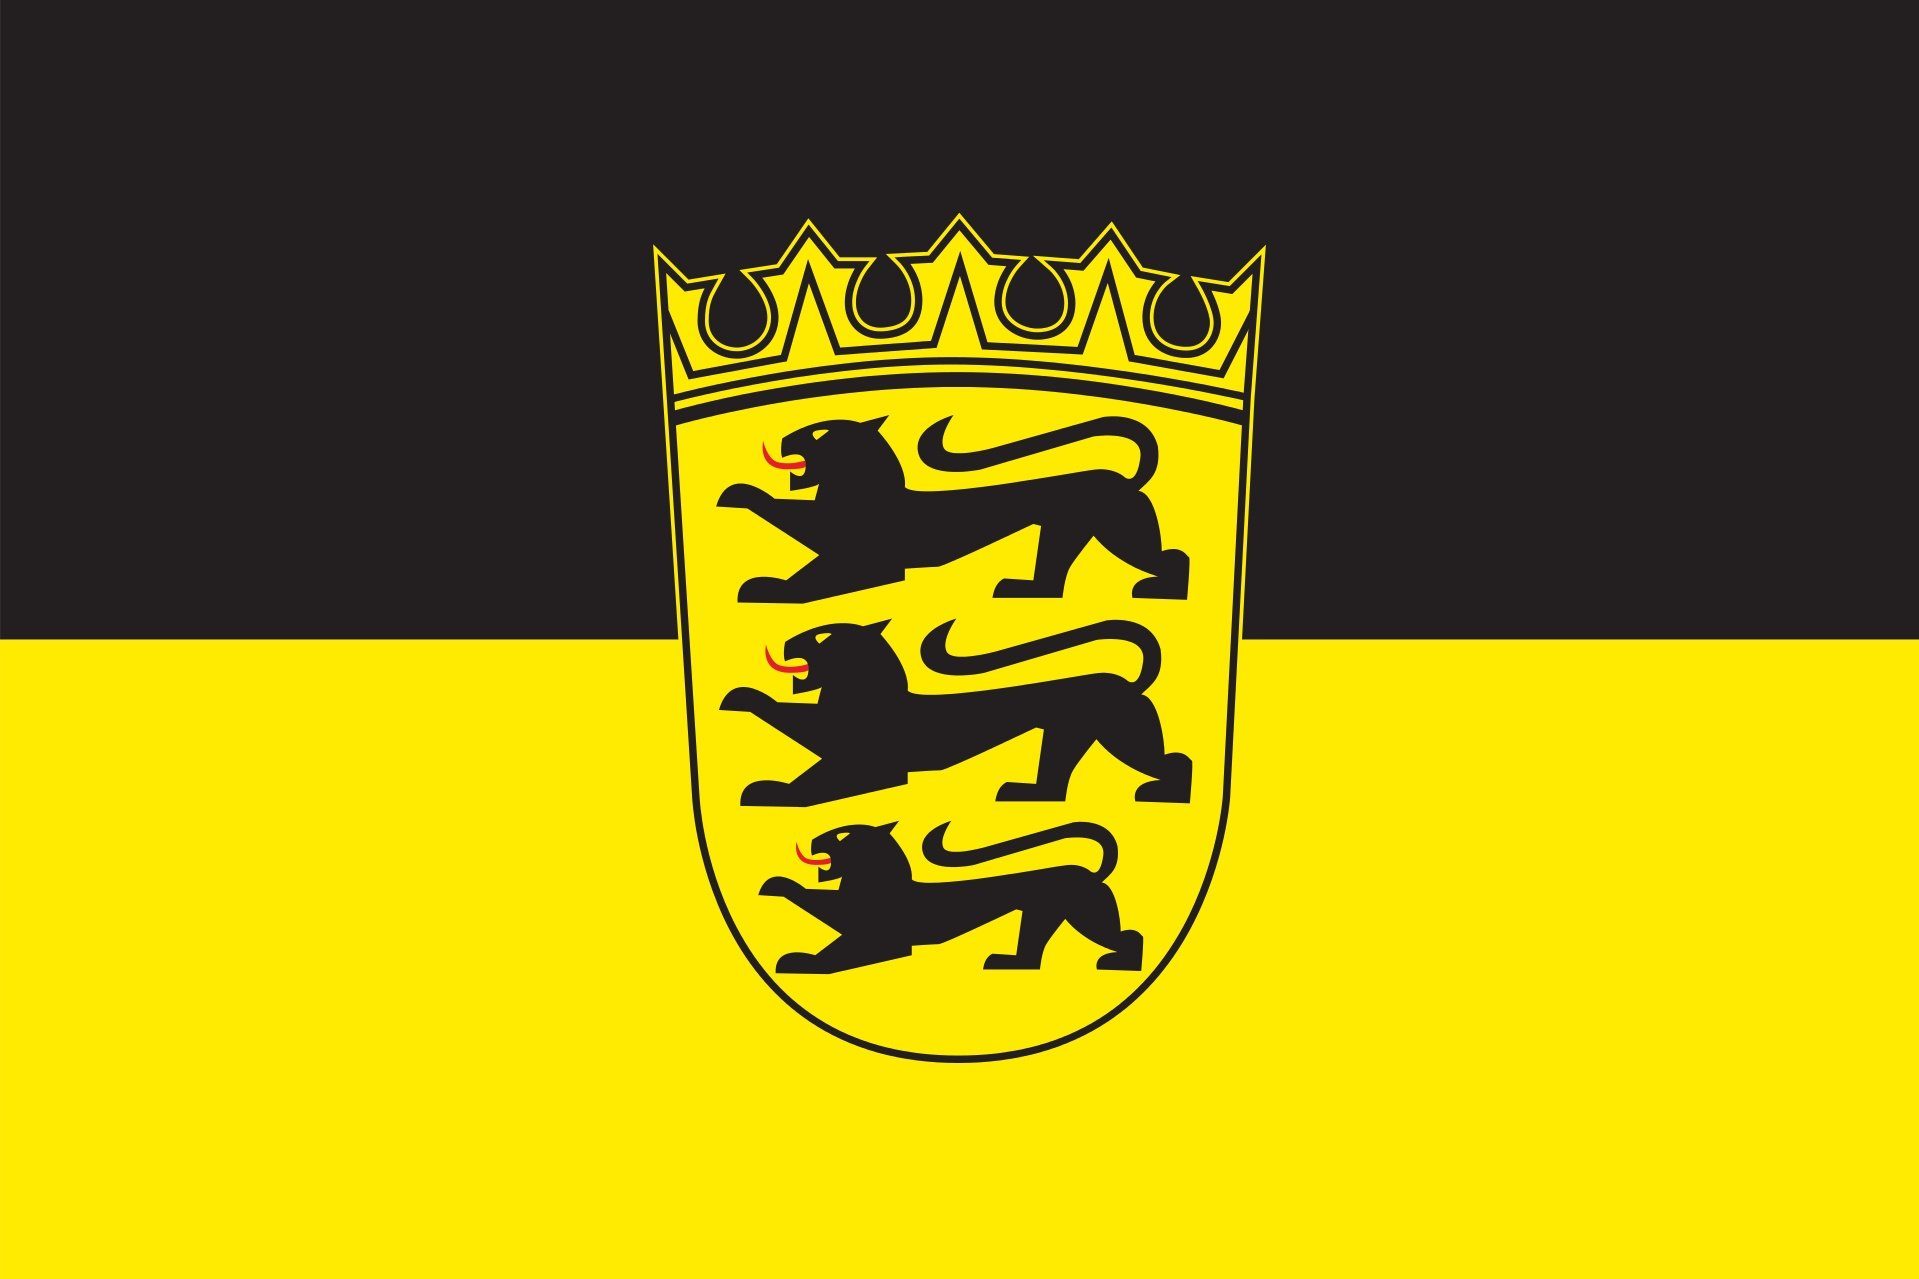 Flagge Querformat flaggenmeer mit g/m² Wappen 160 Baden-Württemberg